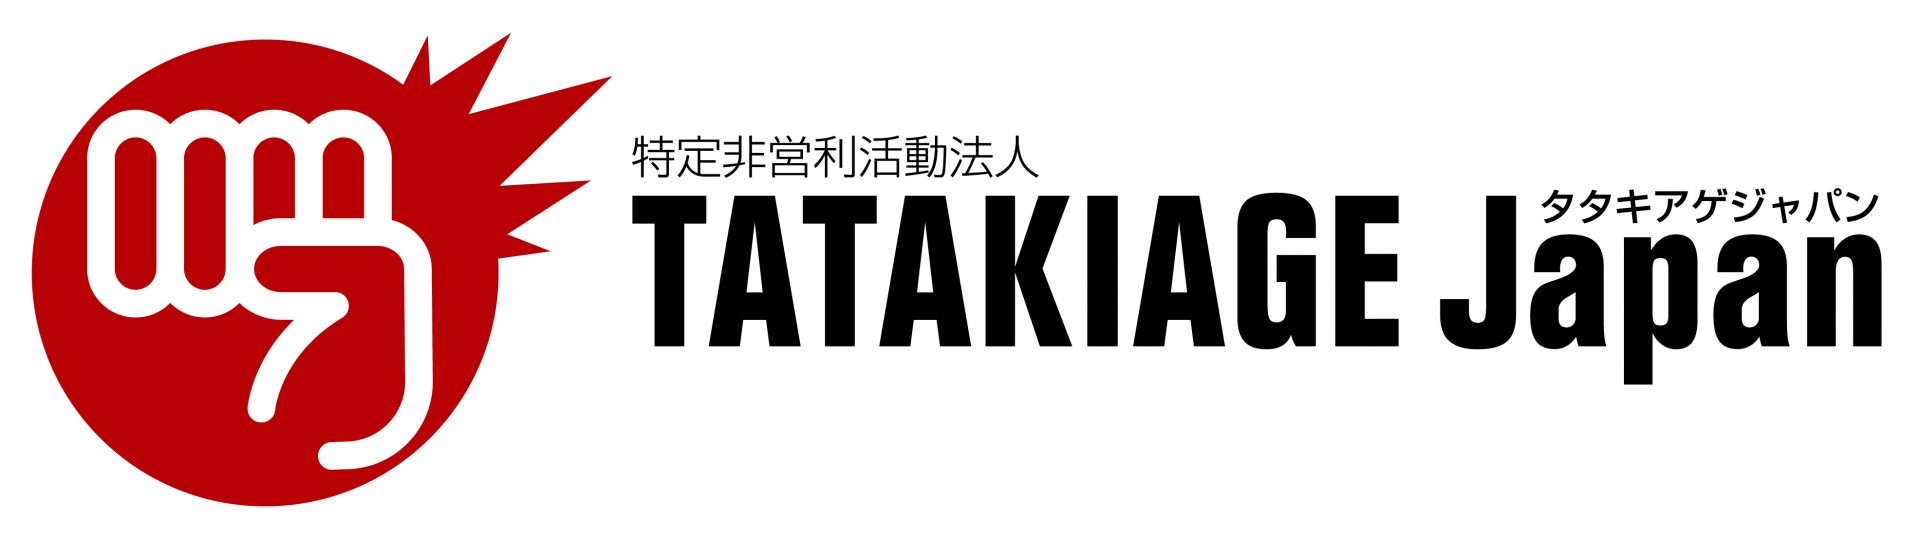 TATAKIAGE Japan_FIX_YOKO